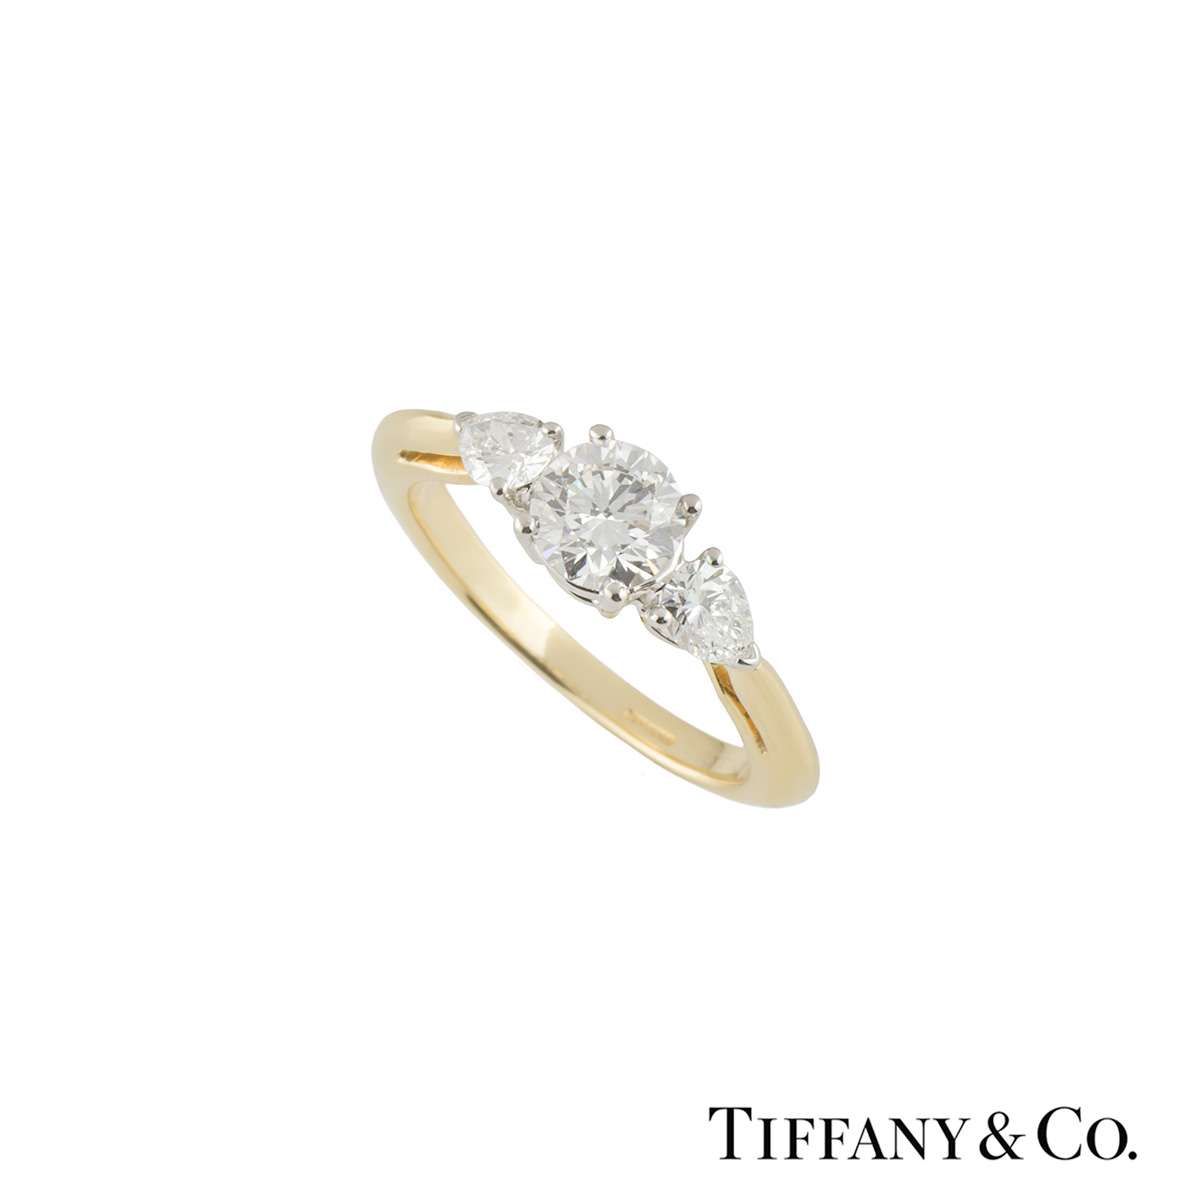 tiffany's three stone engagement ring